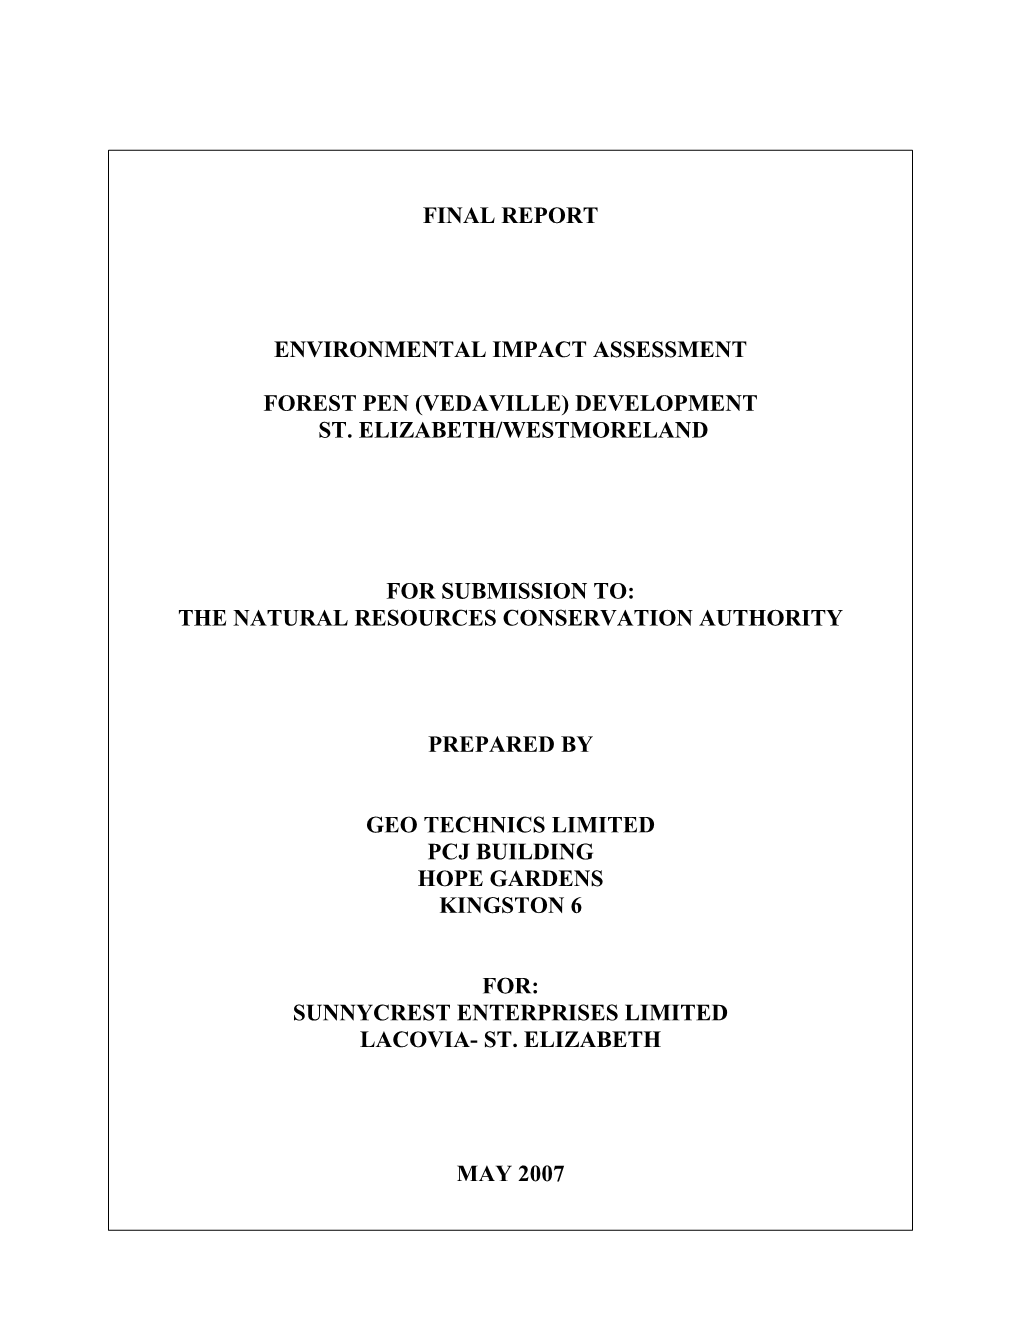 Final Report Environmental Impact Assessment Forest